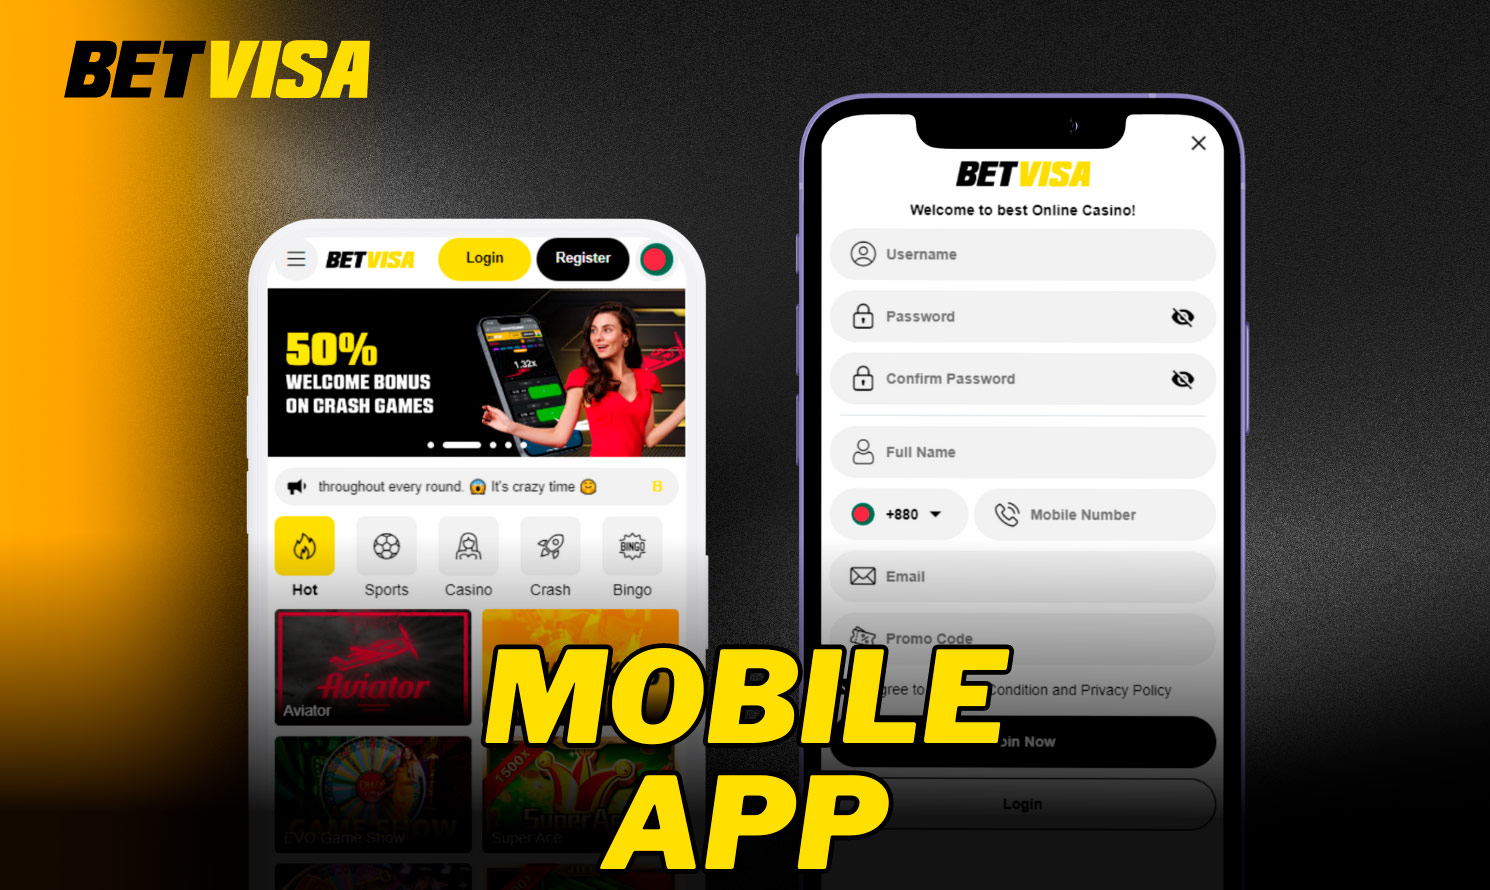 BetVisa Mobile App: Seamless Gaming on the Go